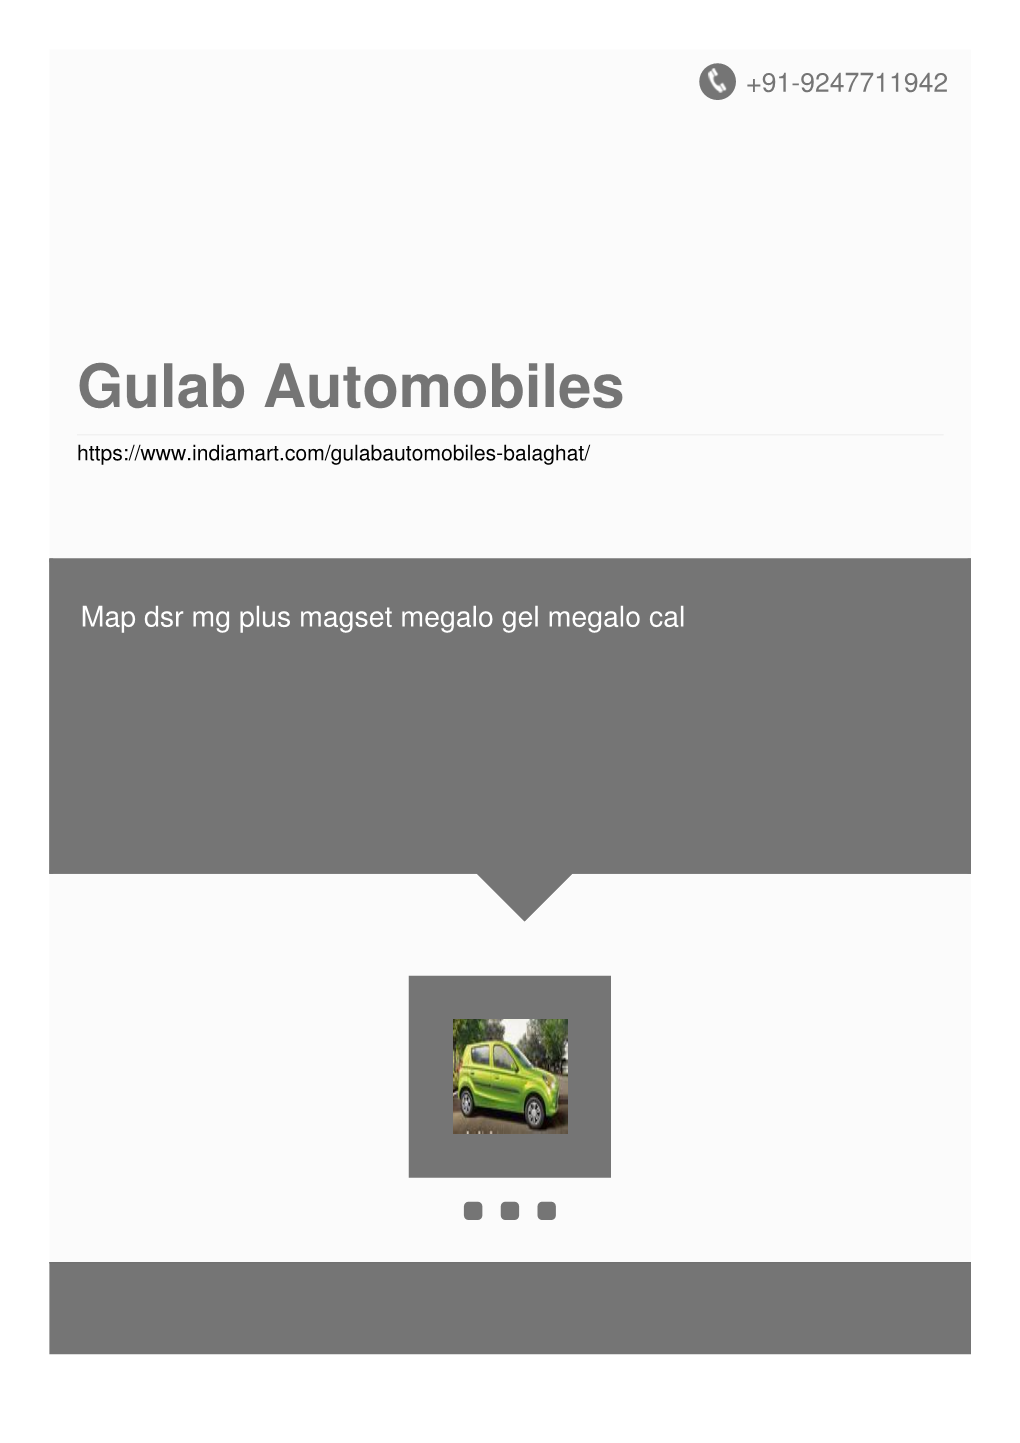 Gulab Automobiles